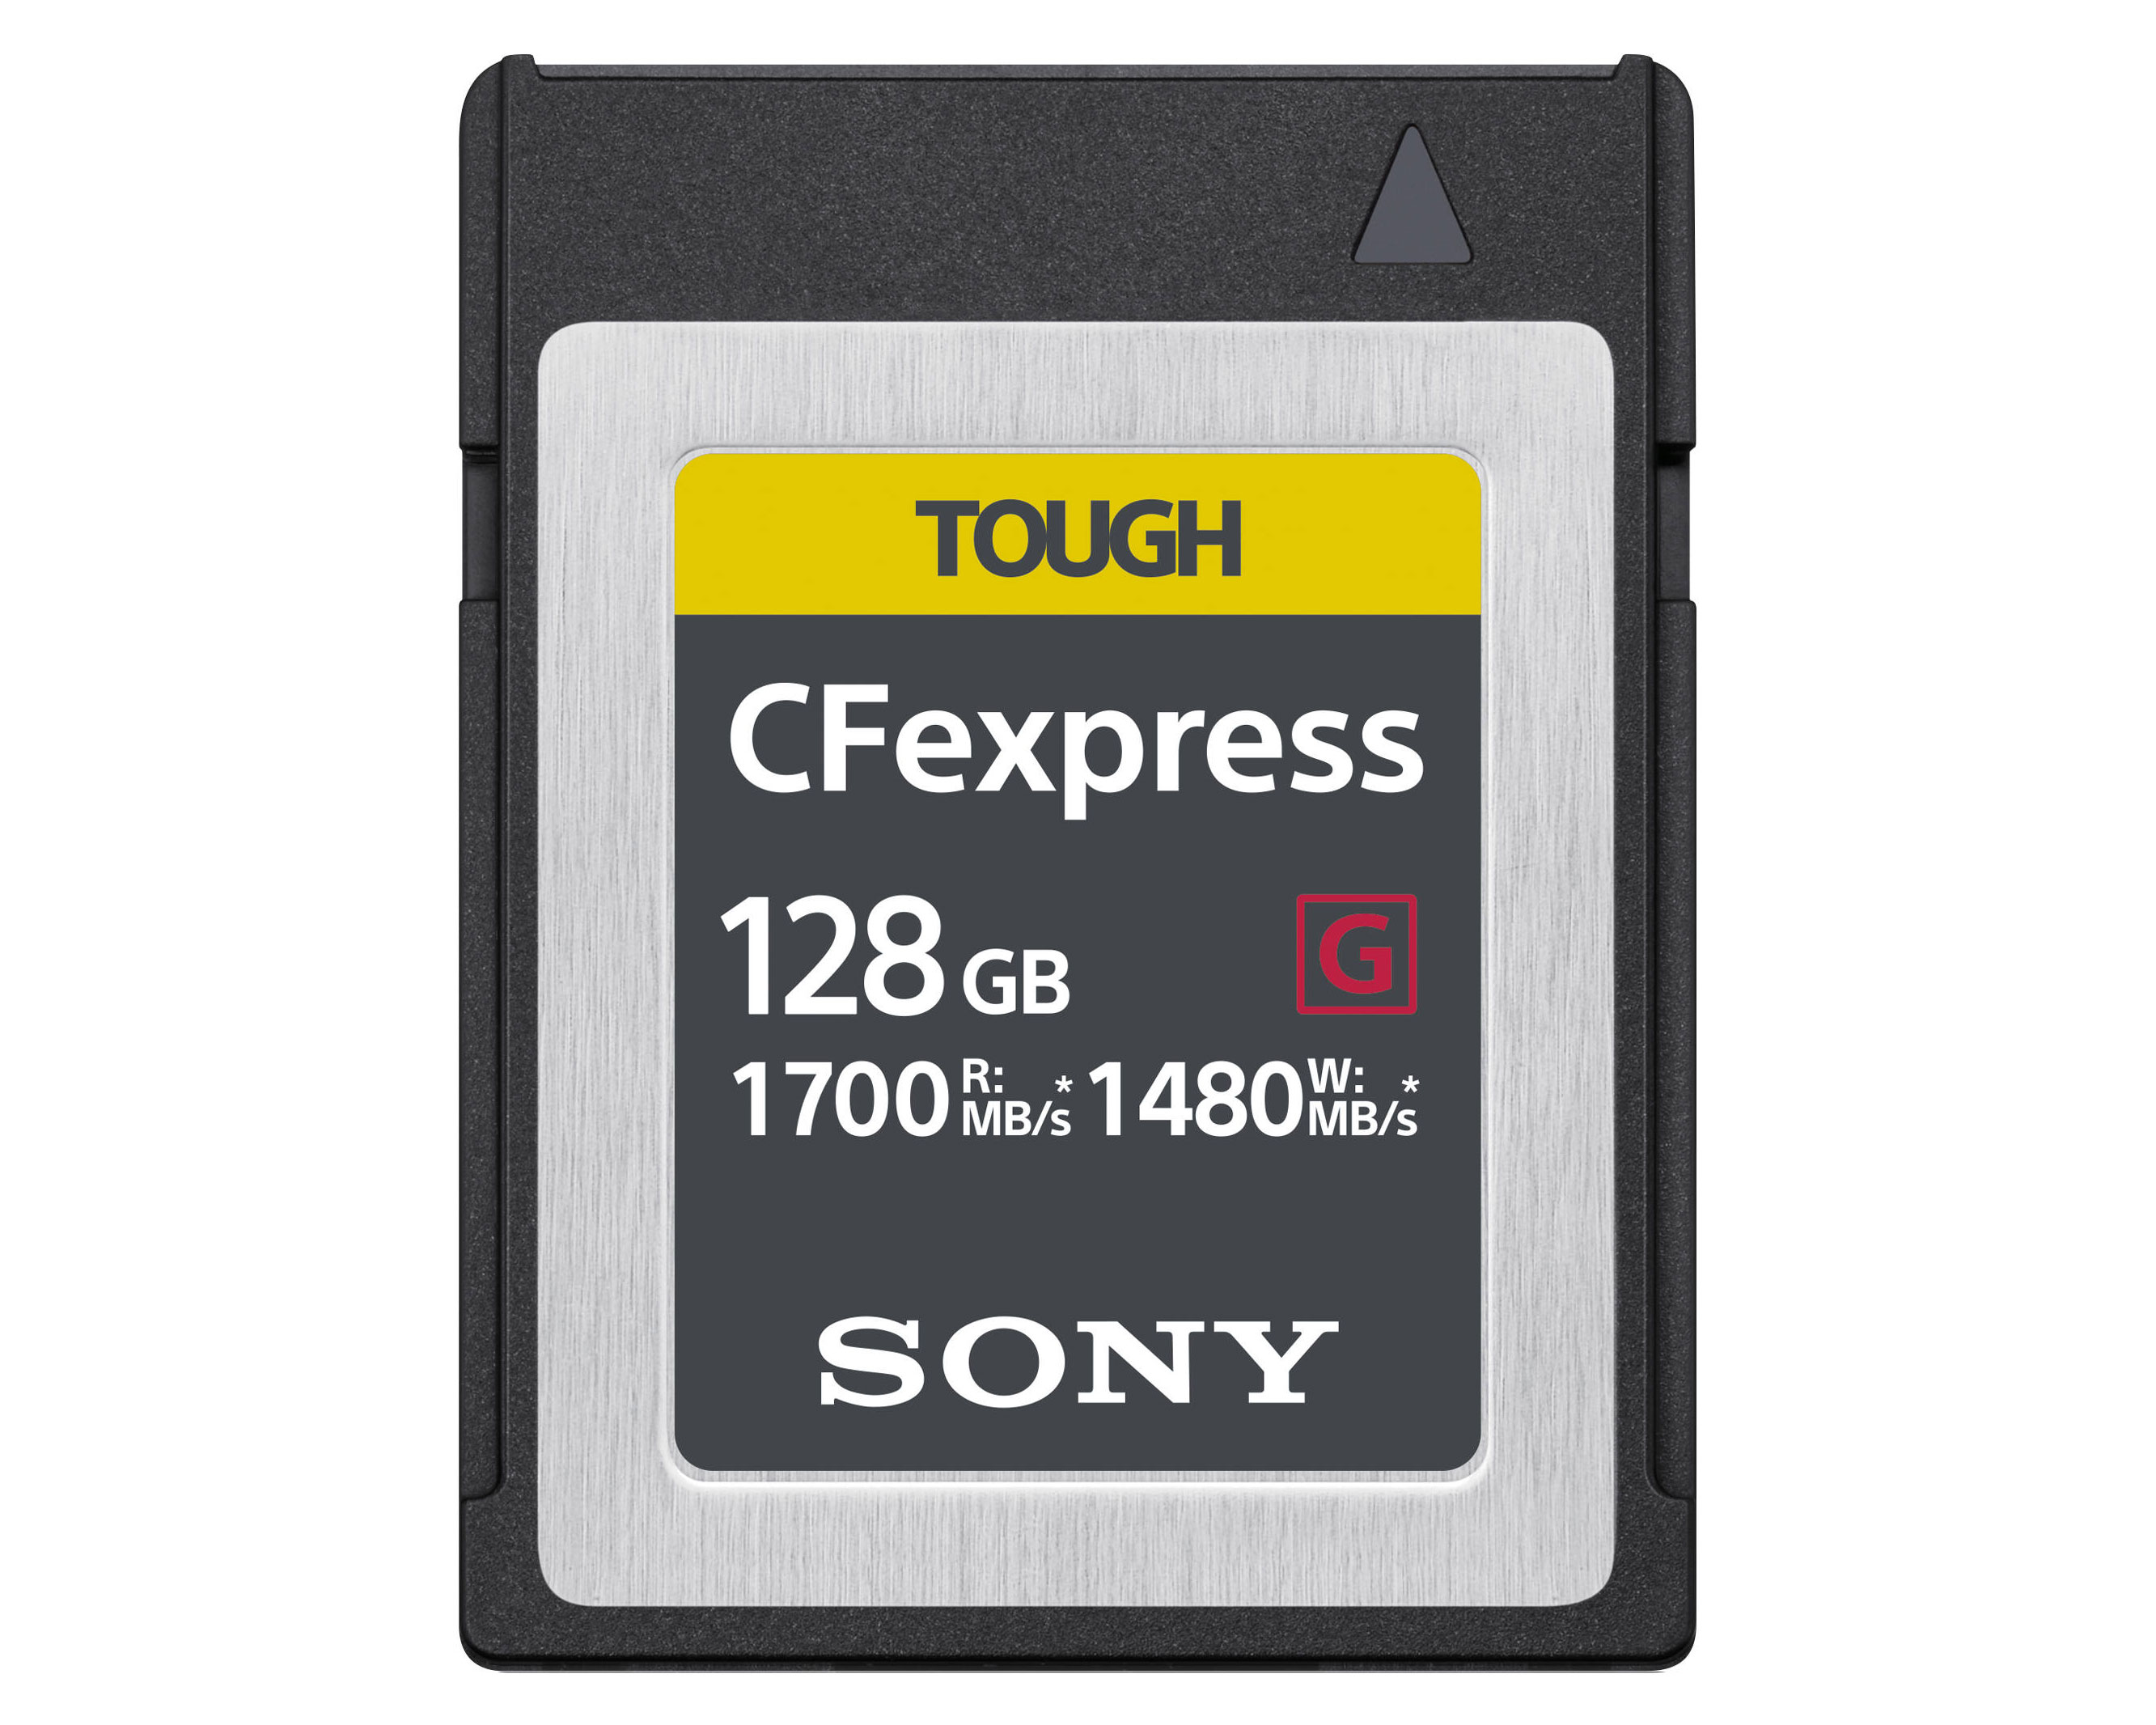 Sony CFexpress Tough G 128GB